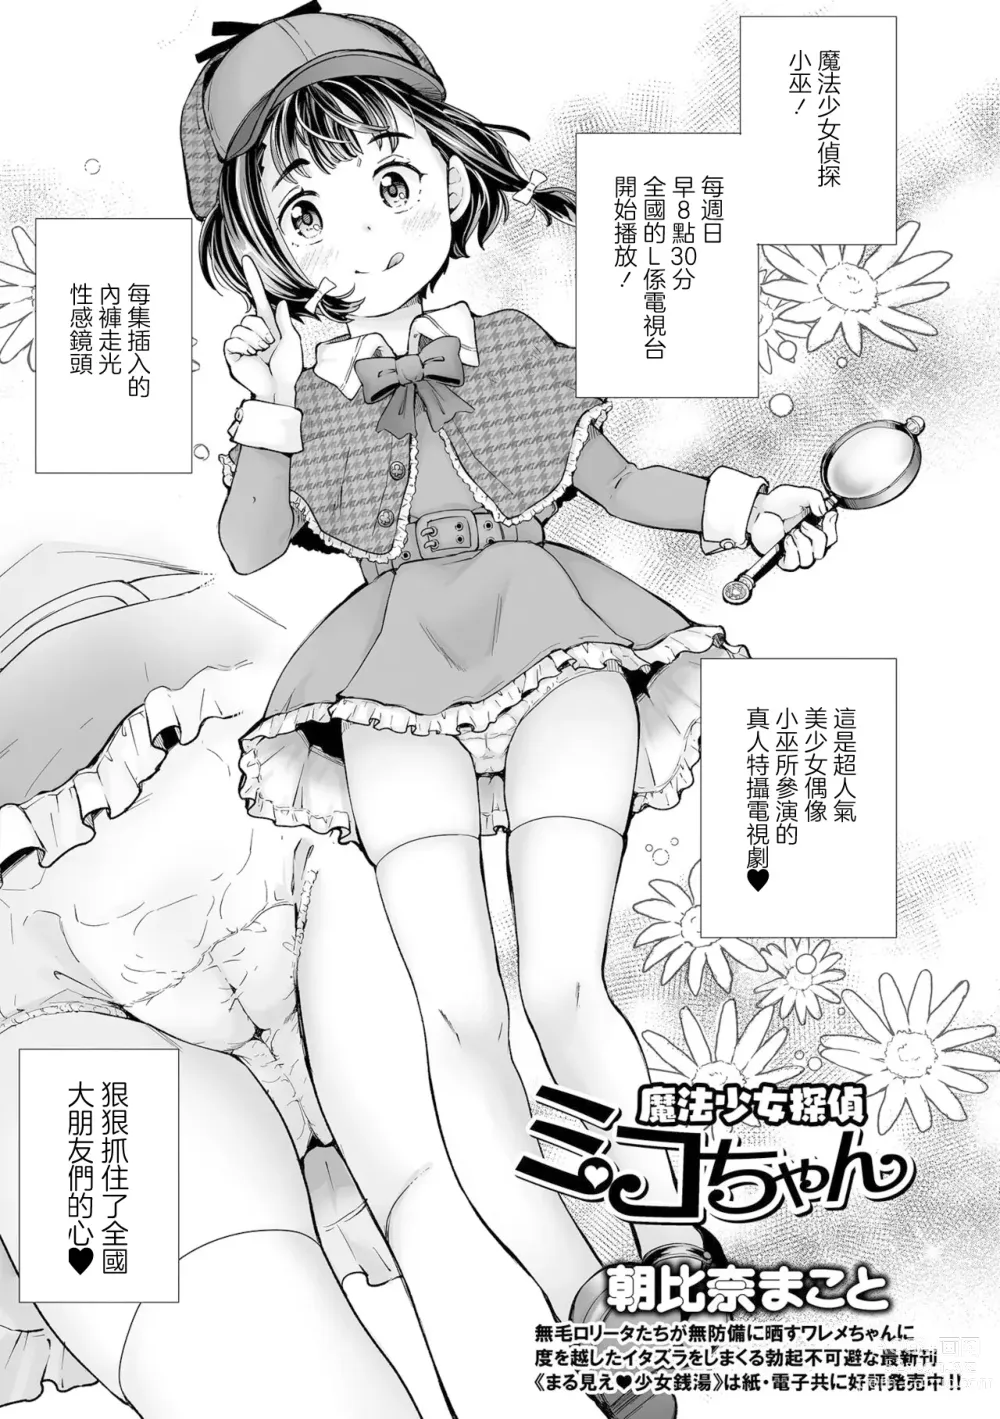 Page 1 of manga Mahou Shoujo Tantei  Miko-chan